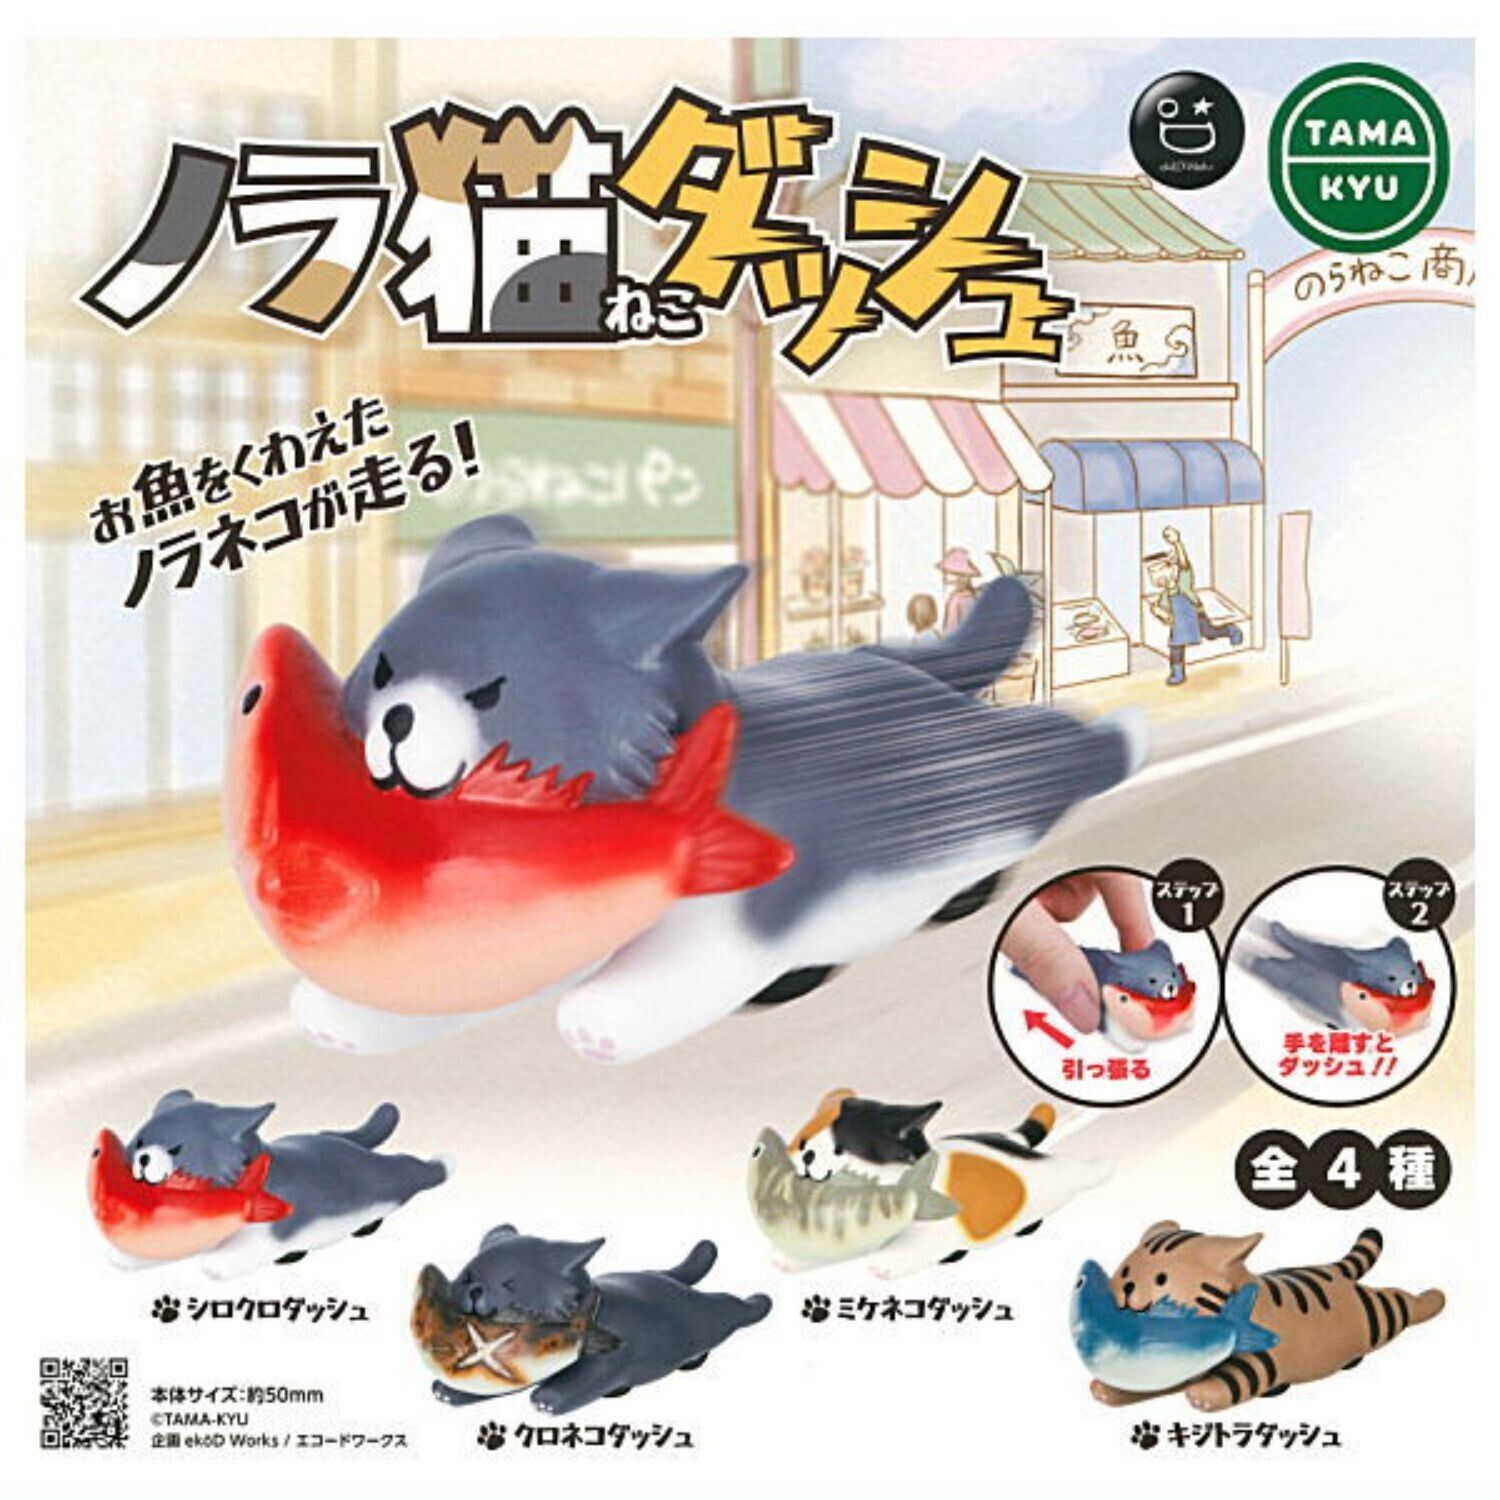 Noraneko stray cat Dash Mascot Capsule Toy 4 Types Full Comp Set Gacha Preorder